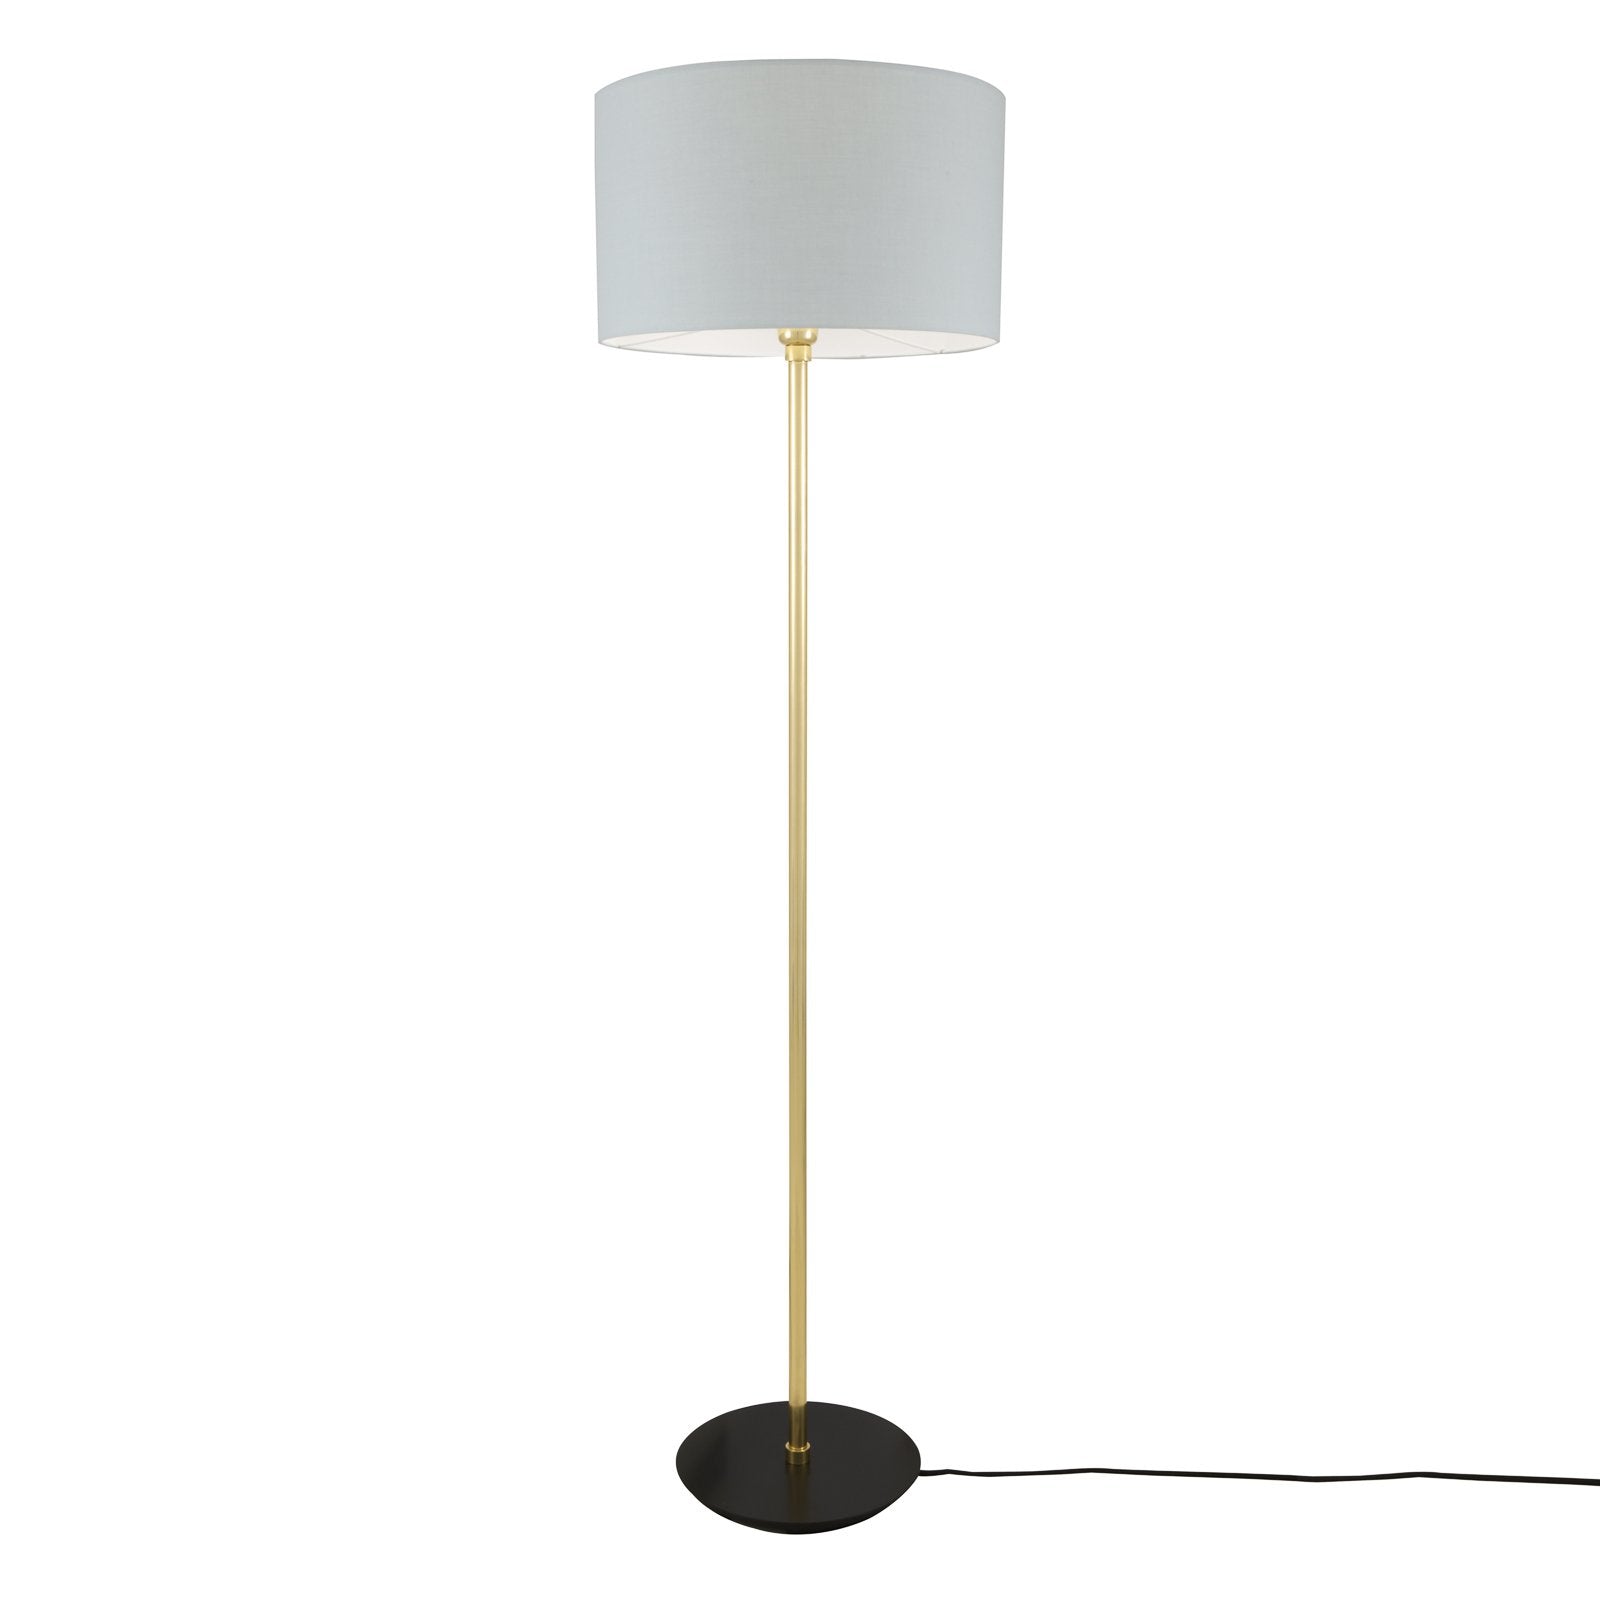 Inch Floor Lamp - Floor Lamps from RETROLIGHT. Made by Mullan Lighting.